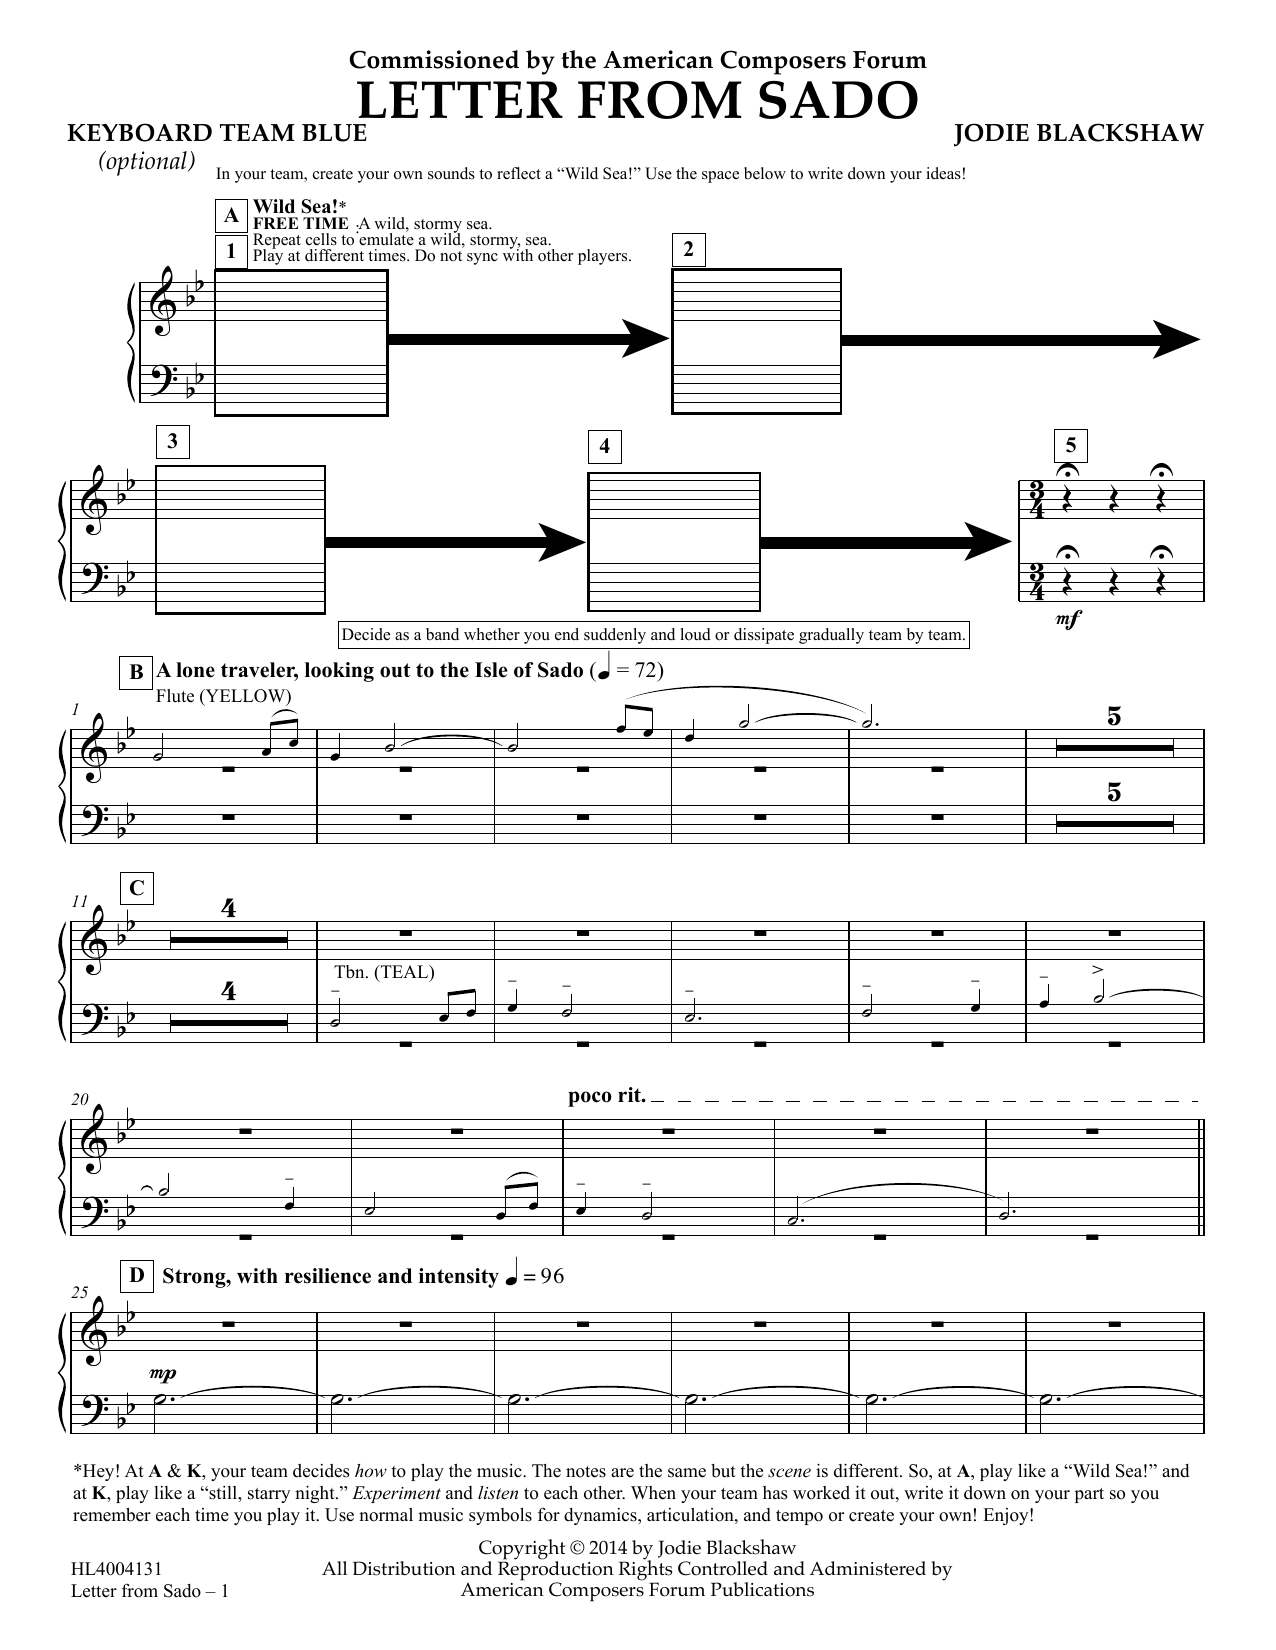 Jodie Blackshaw Letter from Sado - Keyboard (opt) Team Blue Sheet Music Notes & Chords for Concert Band - Download or Print PDF